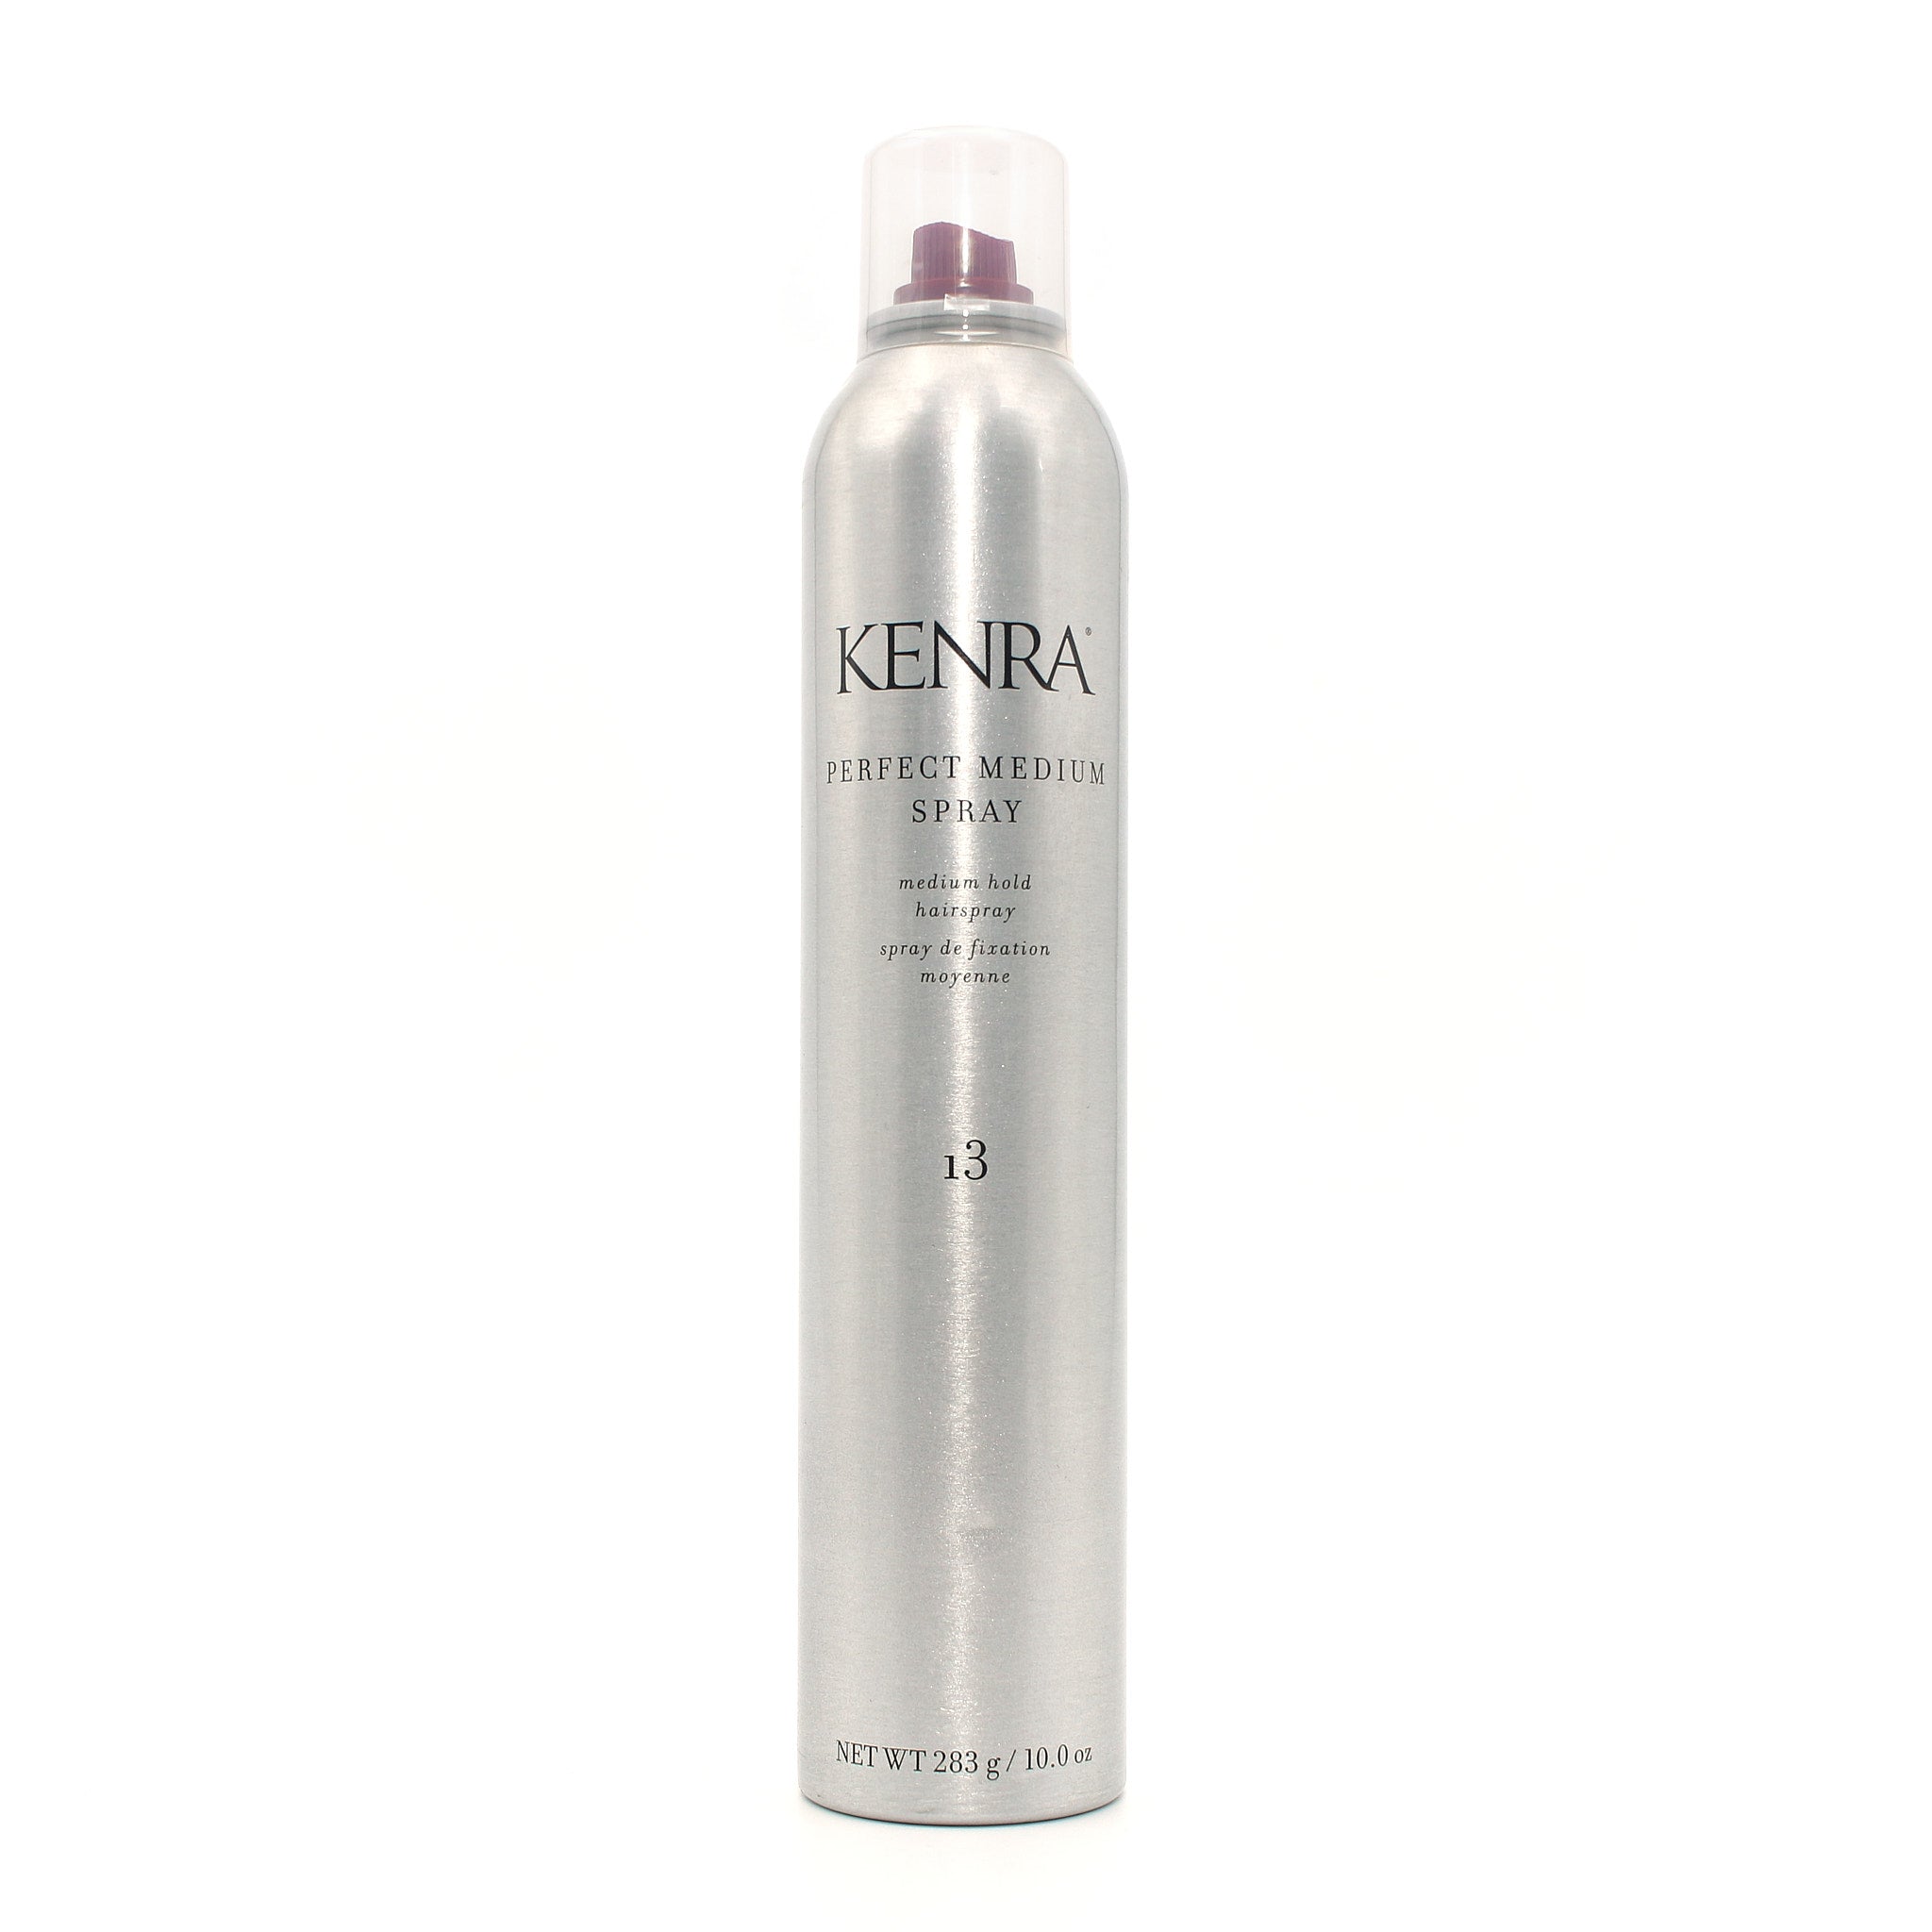 KENRA Perfect Medium Spray 13 Medium Hold 10 oz